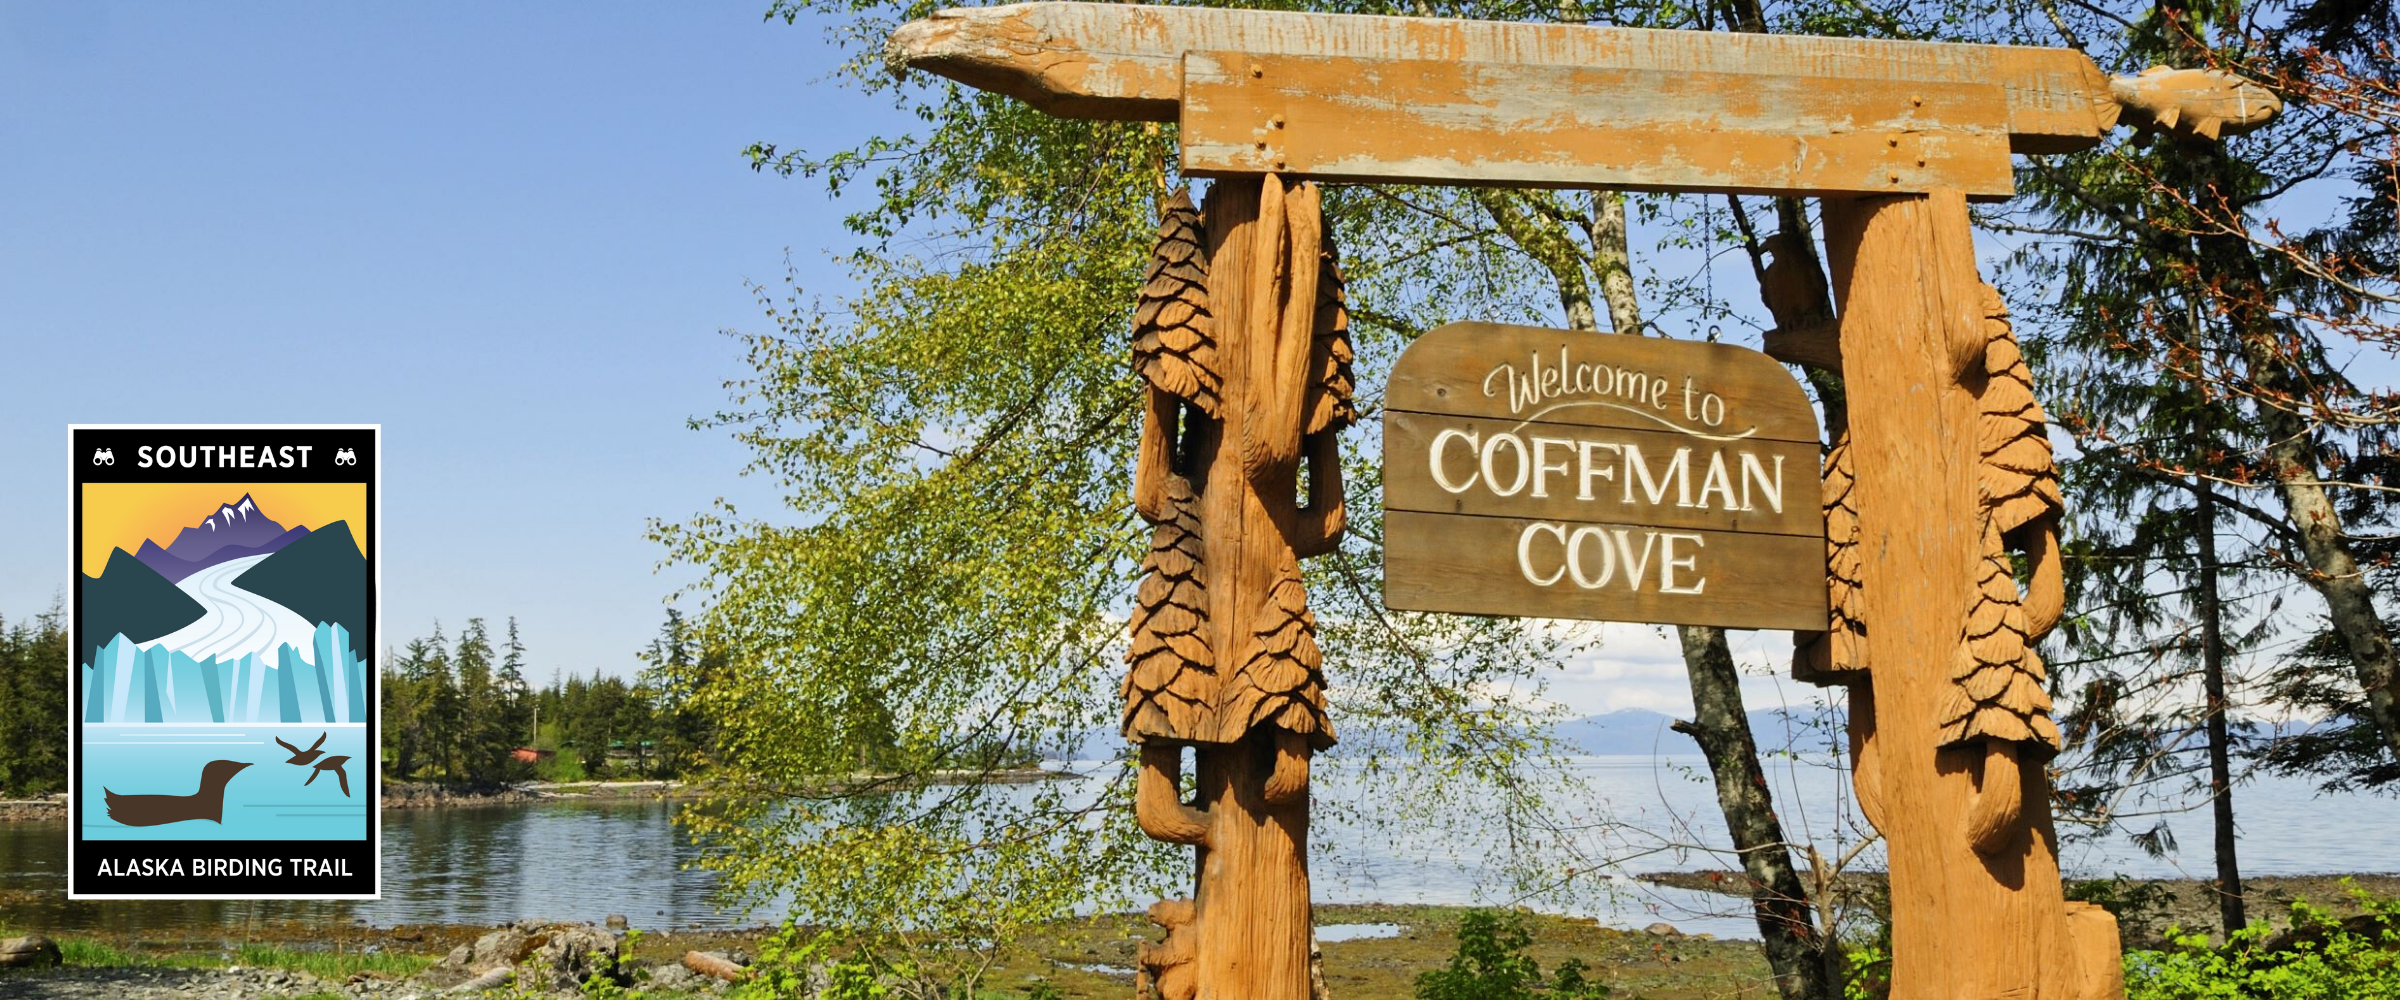 Coffman Cove.